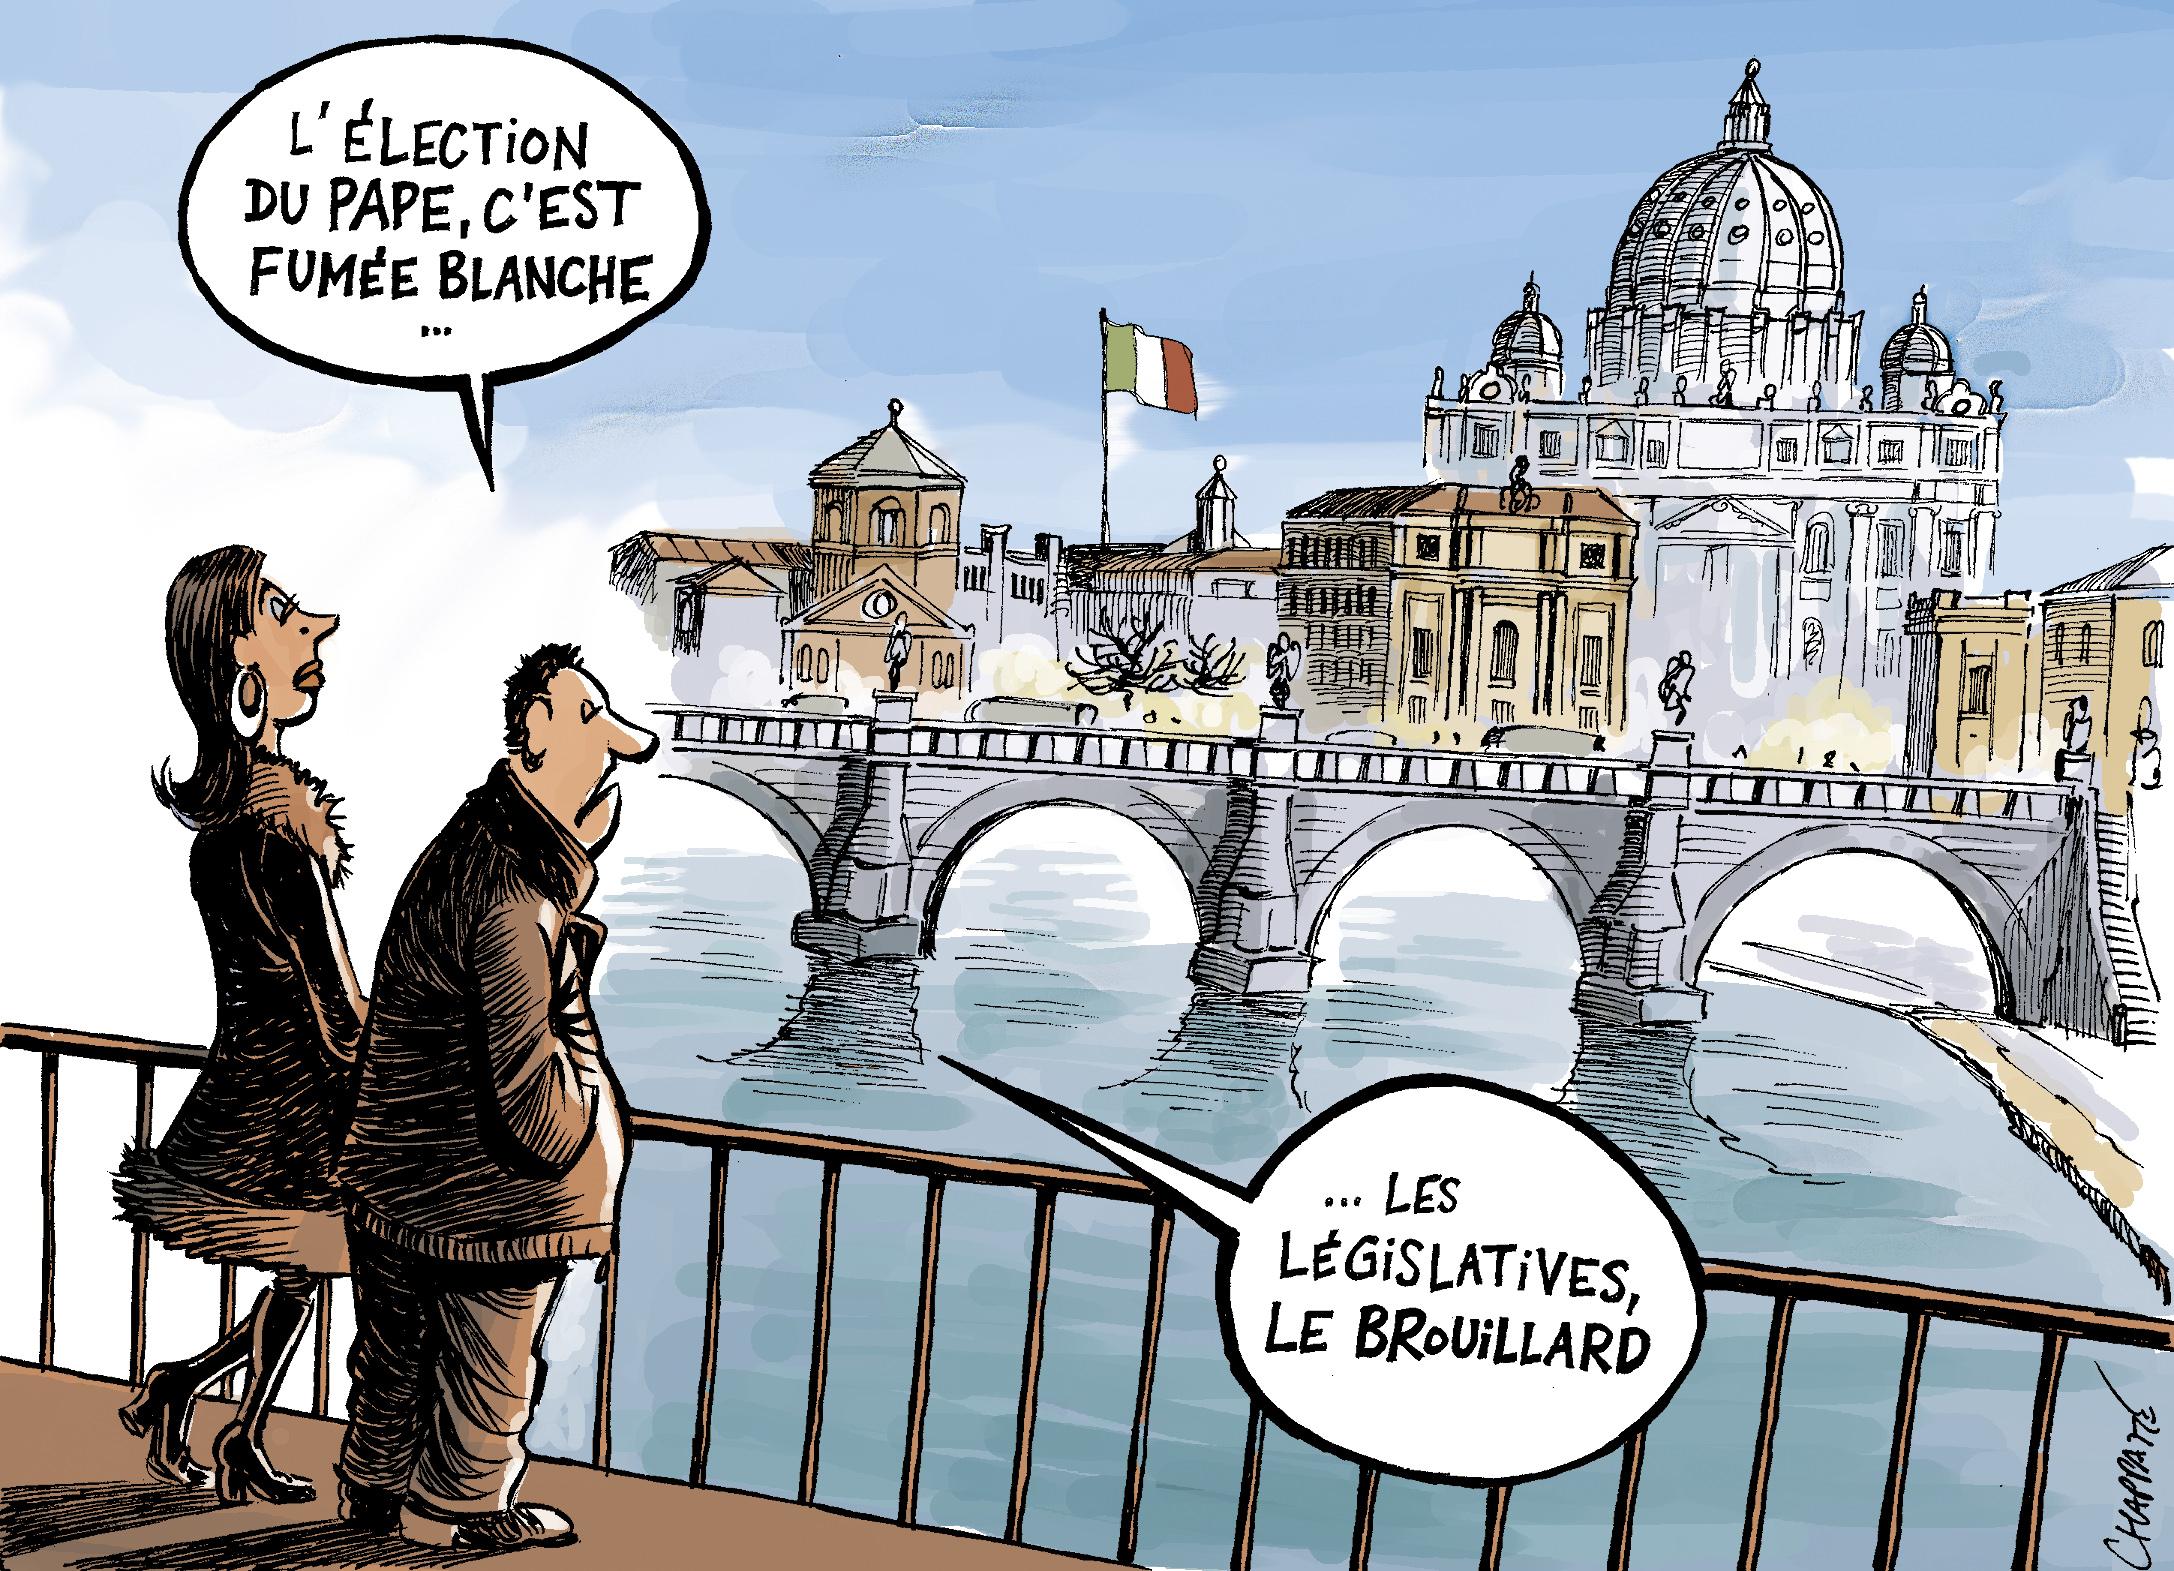 L'Italie ingouvernable?